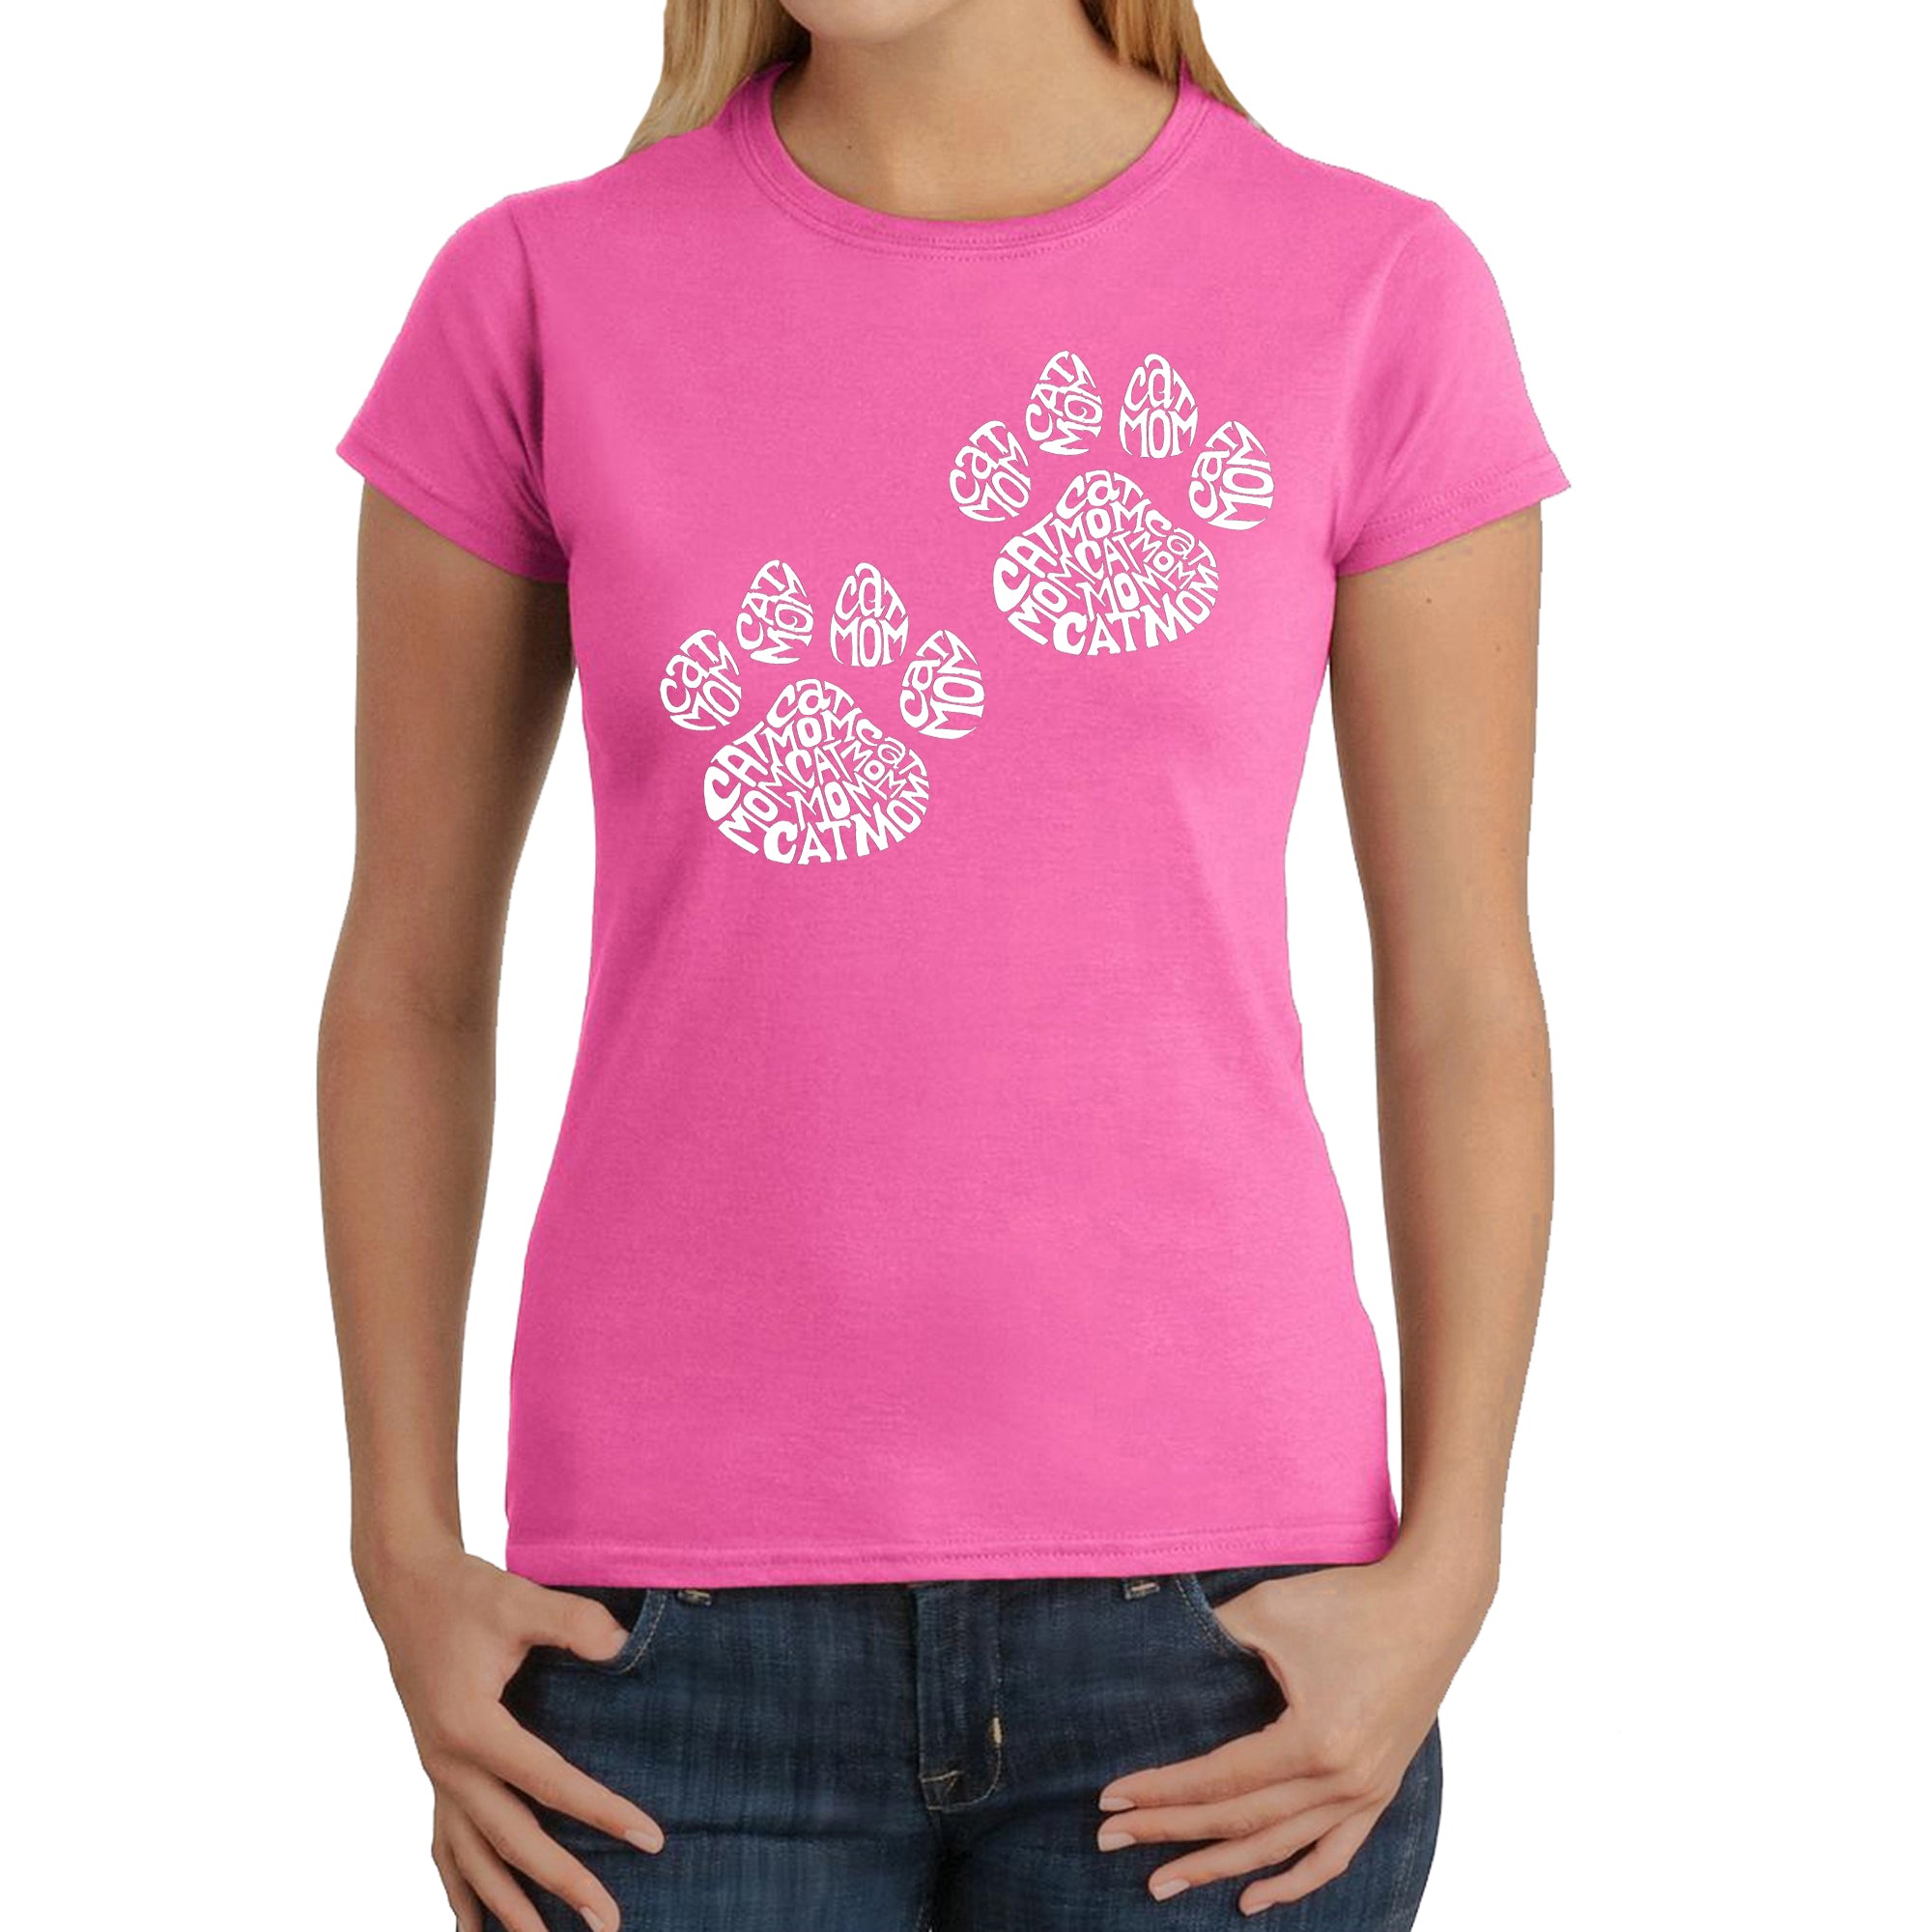 Cat Mom - Women's Word Art T-Shirt - Pink - Large